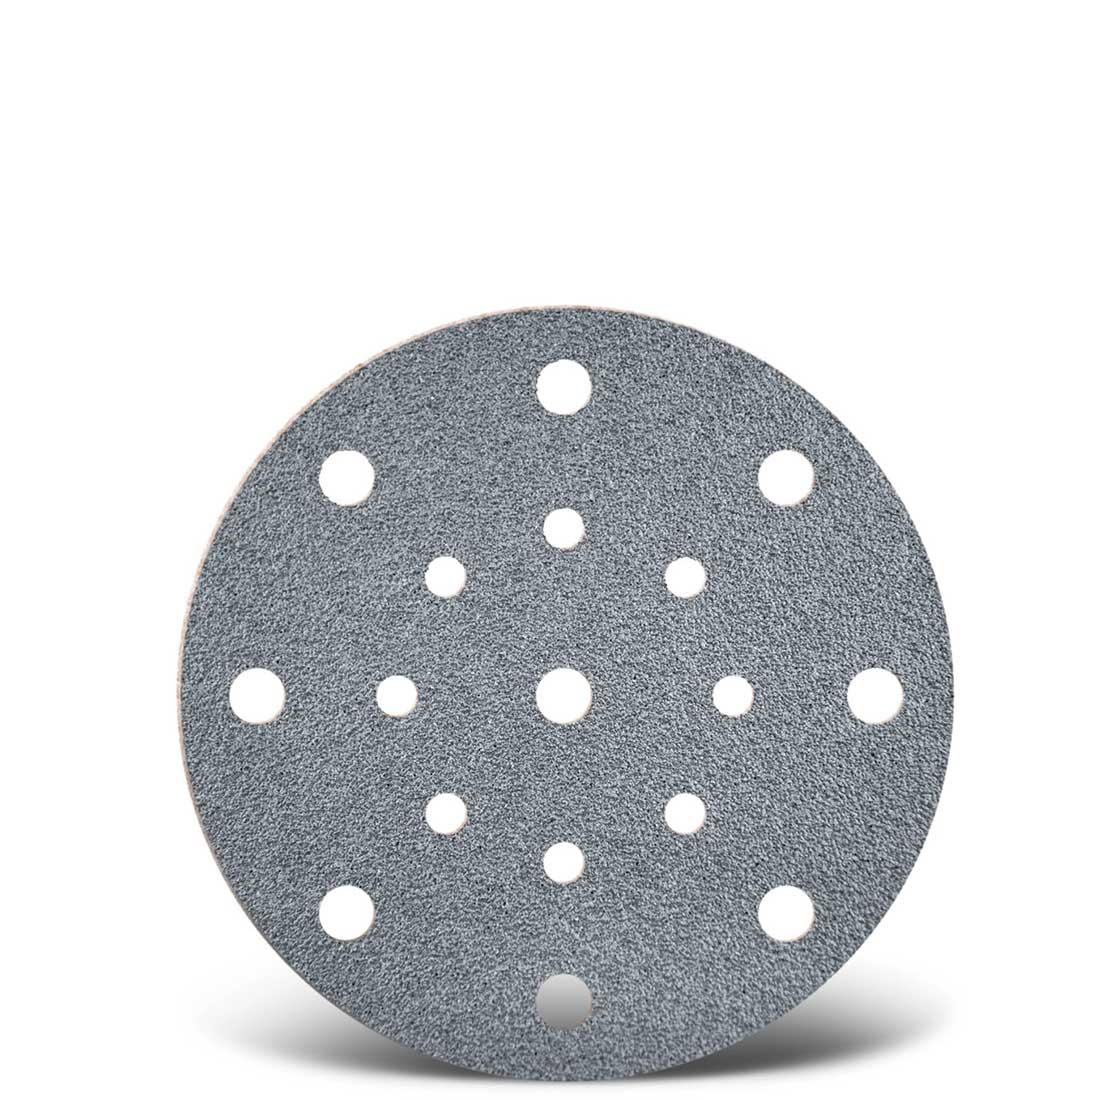 MENZER hook & loop sanding discs for random orbital sanders, G40–400, Ø 150 mm / 17 hole / semi-friable aluminium oxide